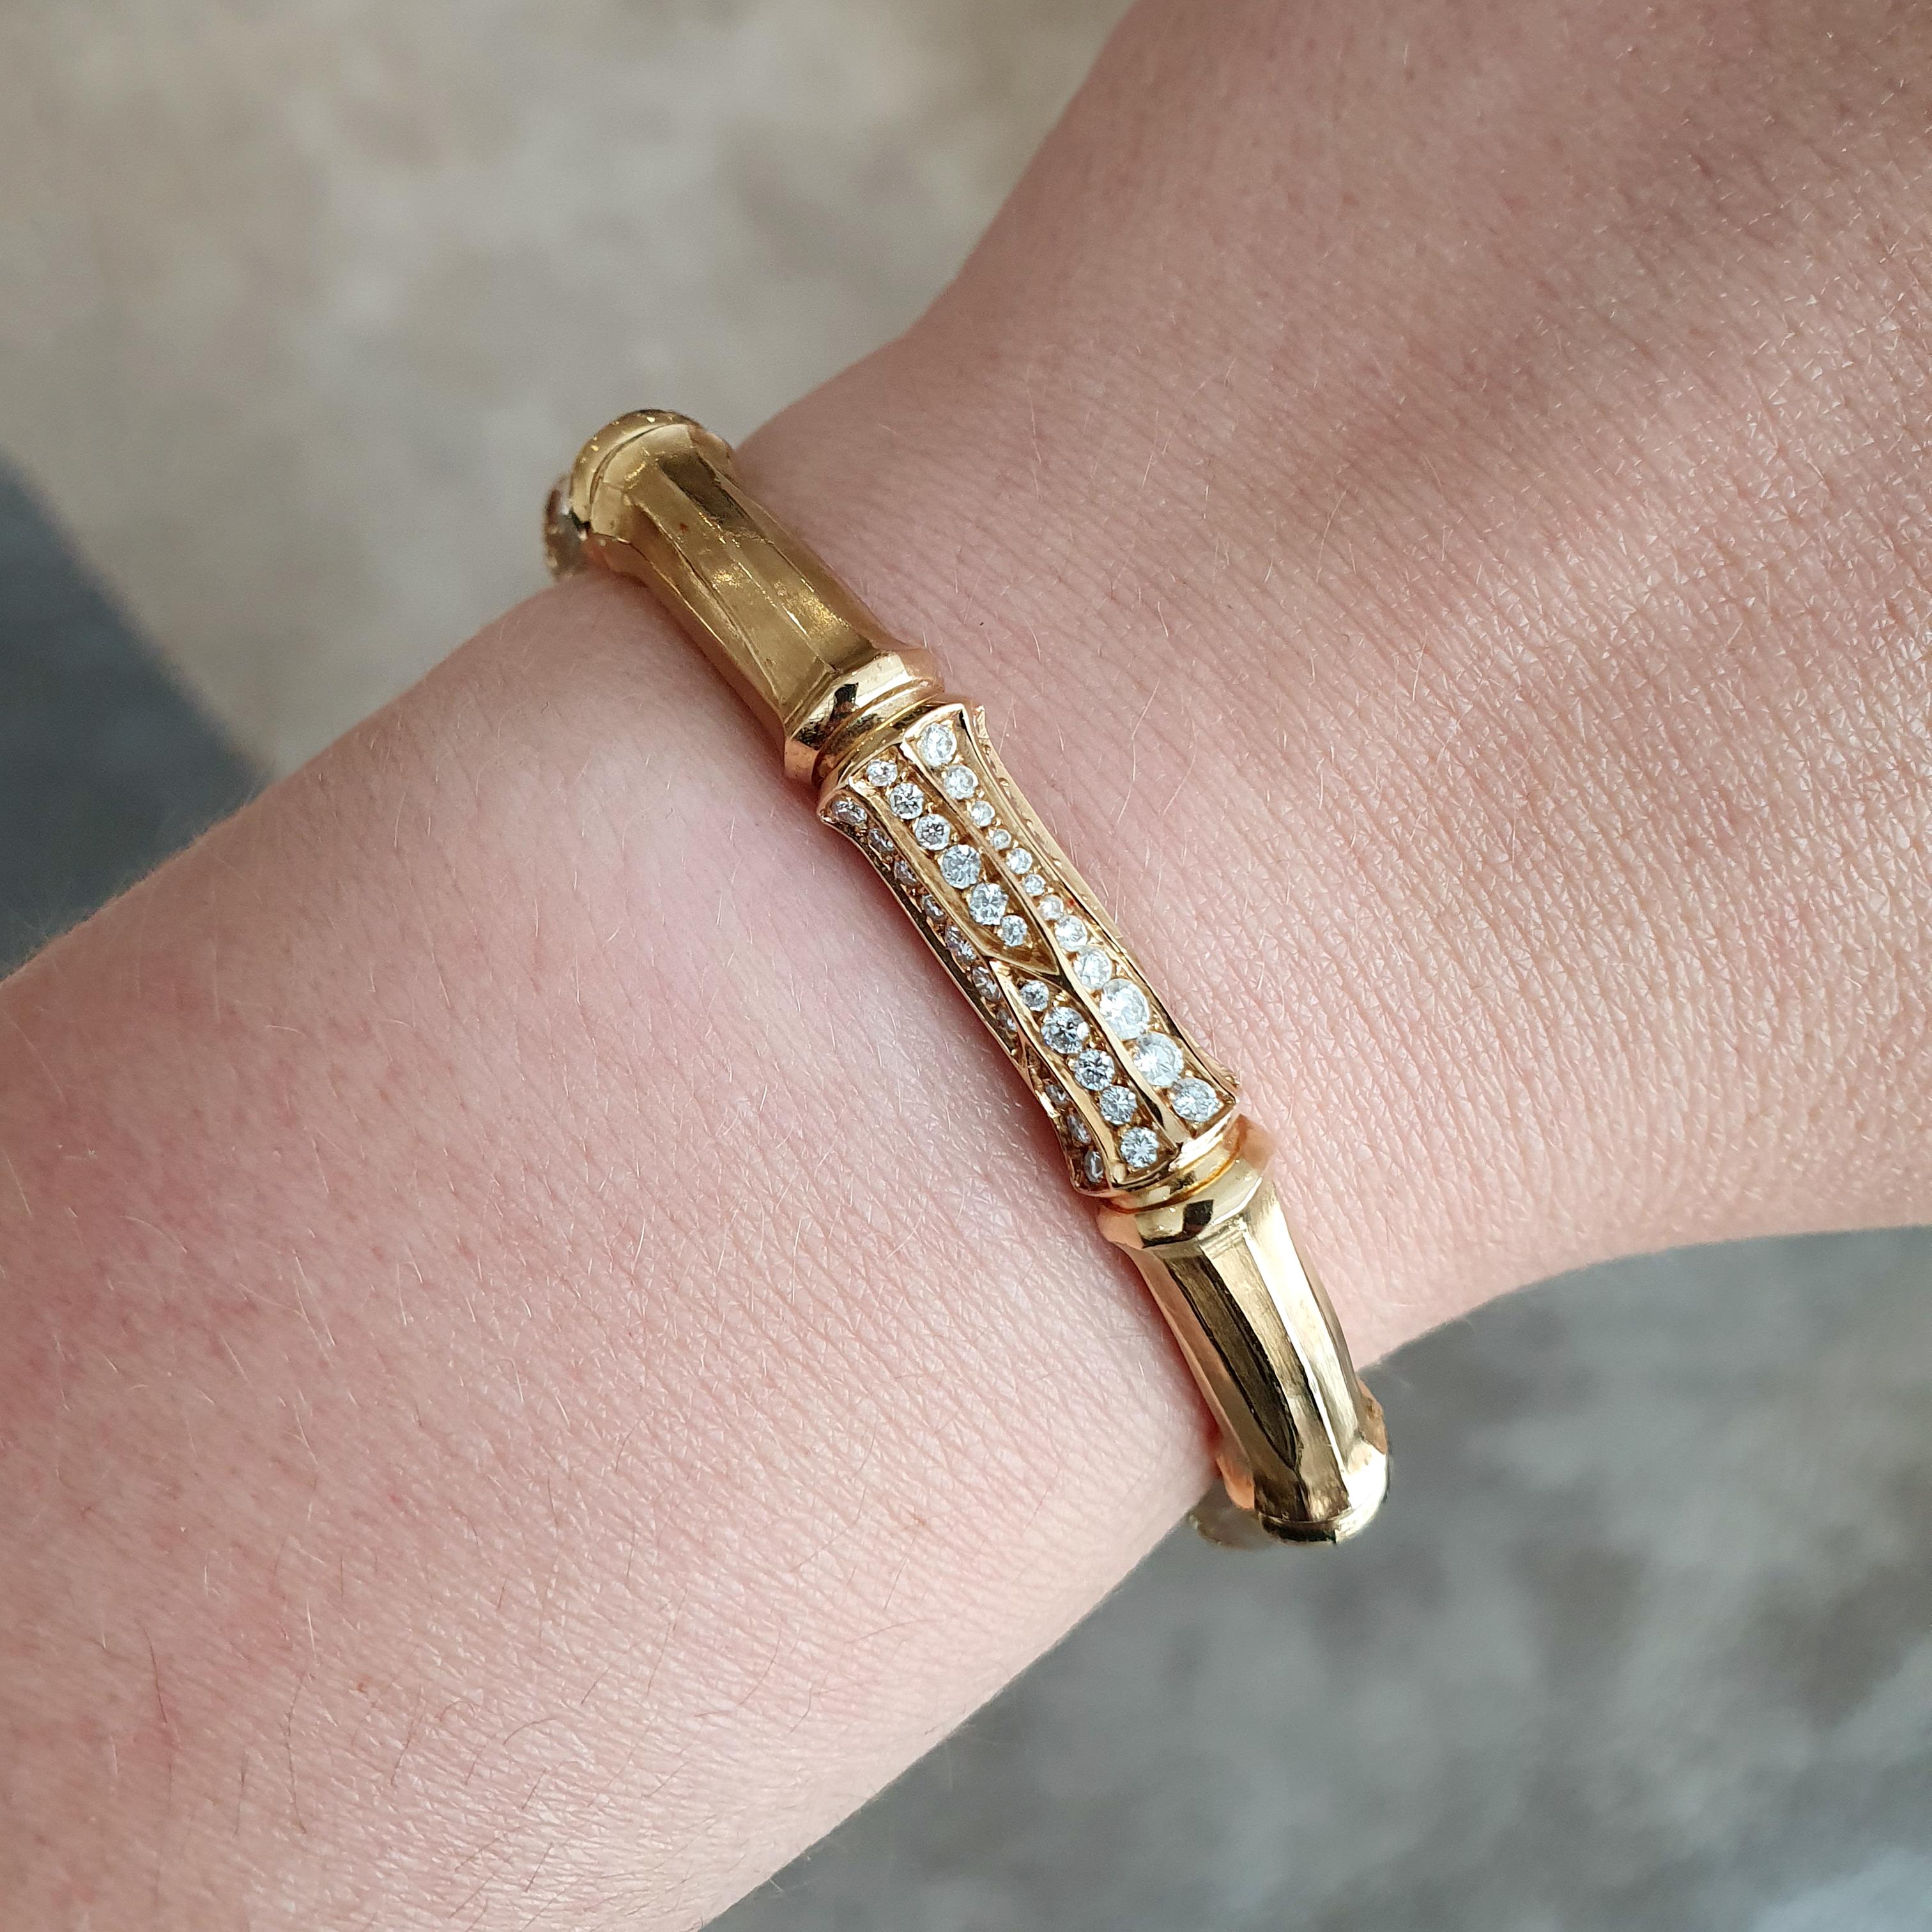 Women's or Men's Cartier Gold Bamboo Bangle Bracelet with Diamonds